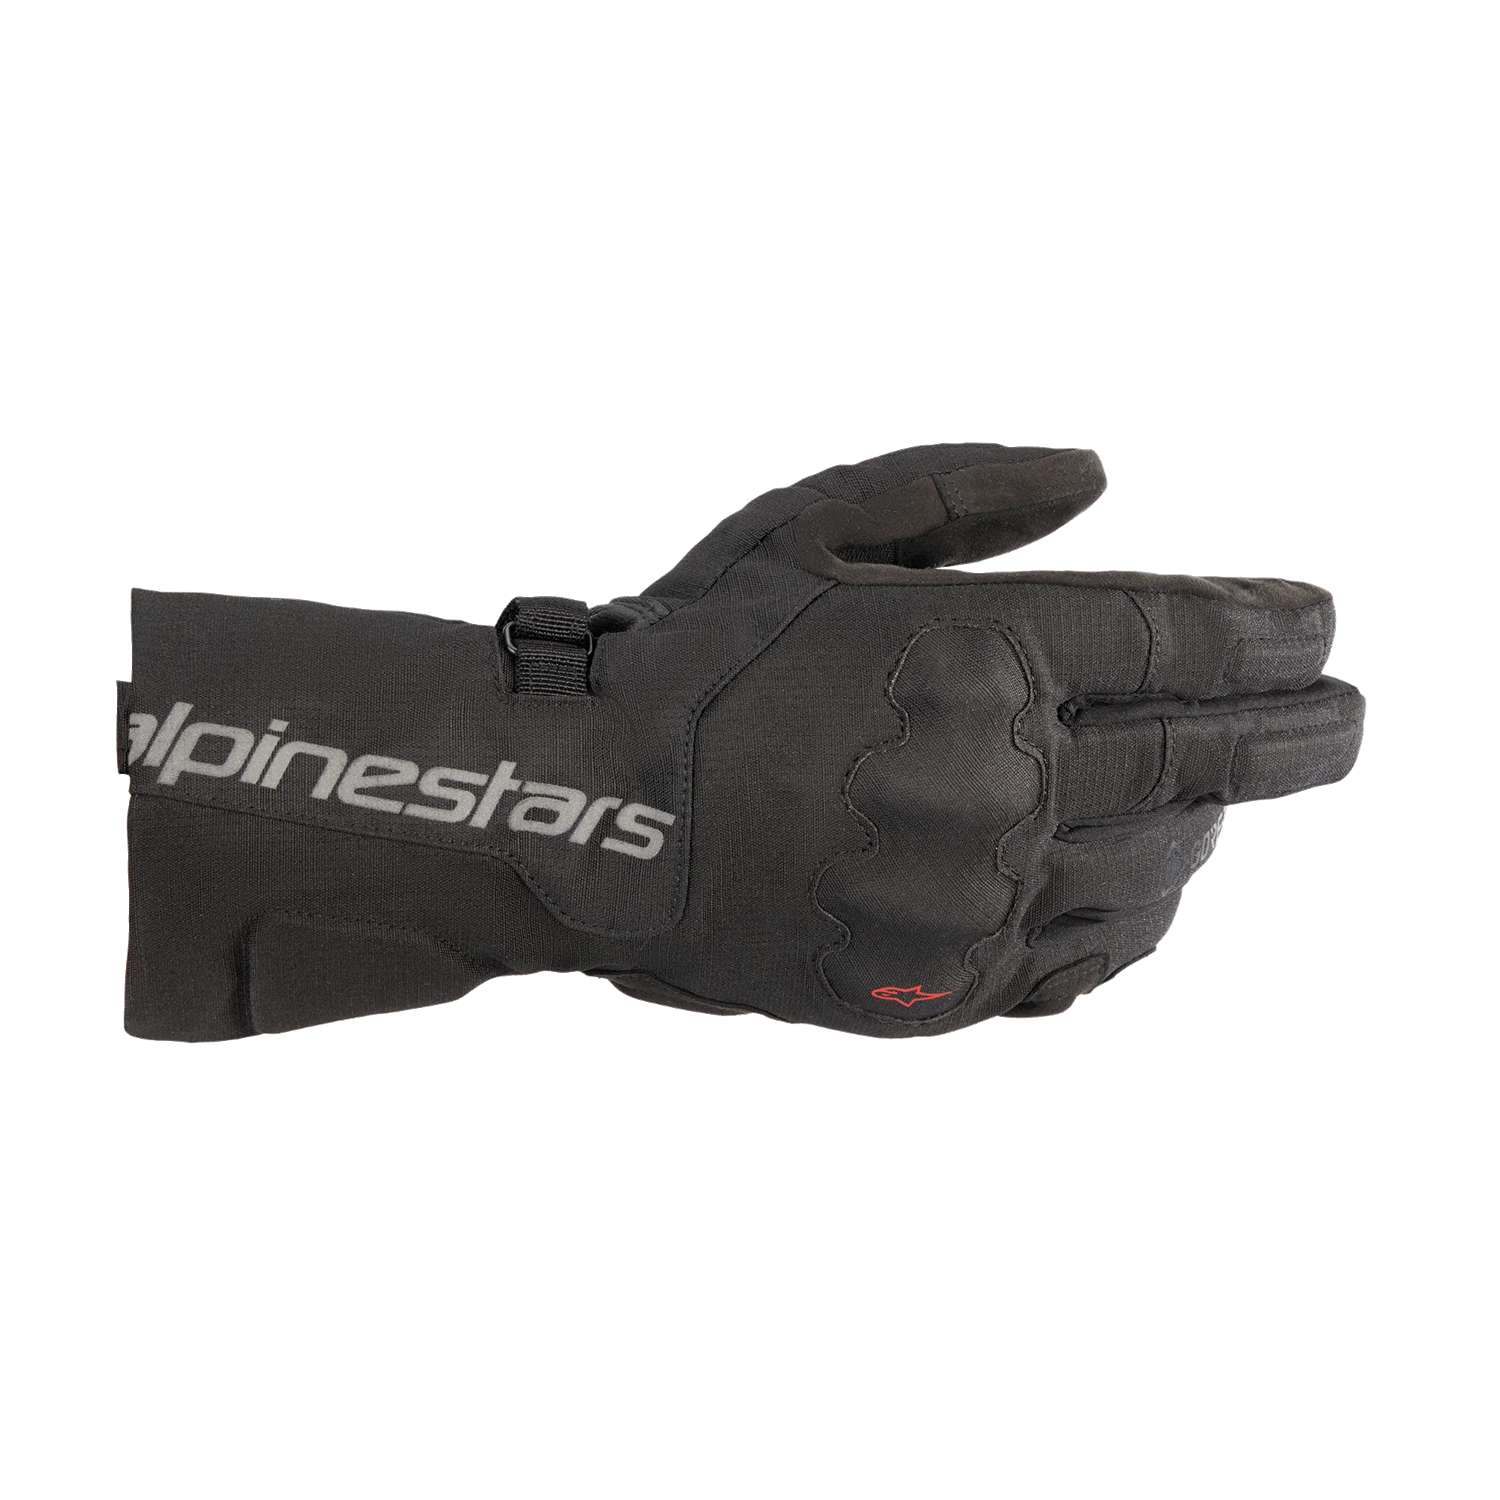 Image of Alpinestars Wr-X Gore-Tex Gloves Black Size XL ID 8059347243641